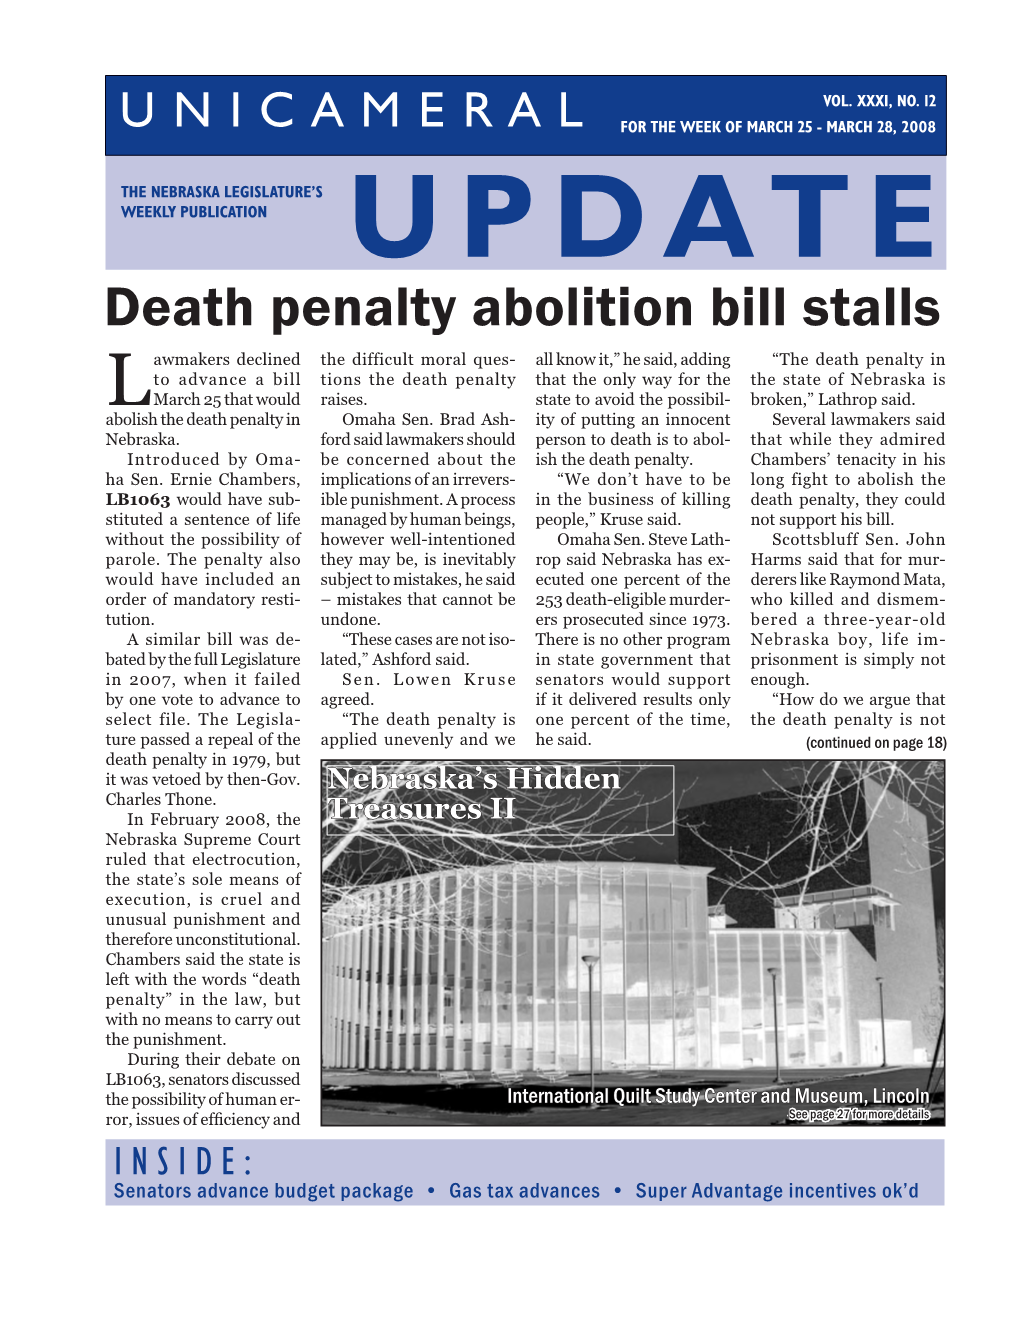 Death Penalty Abolition Bill Stalls